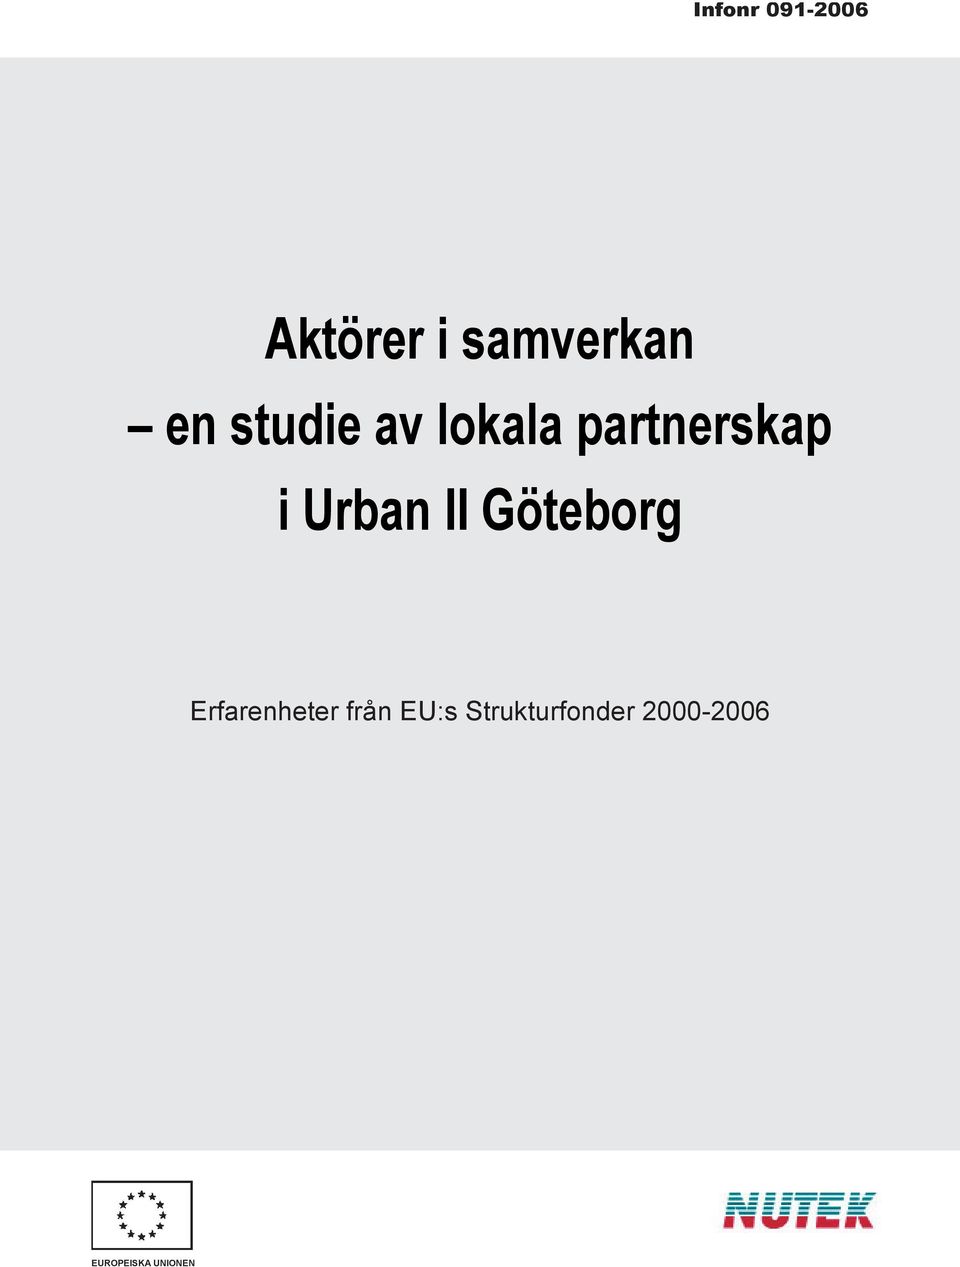 II Göteborg Erfarenheter från EU:s